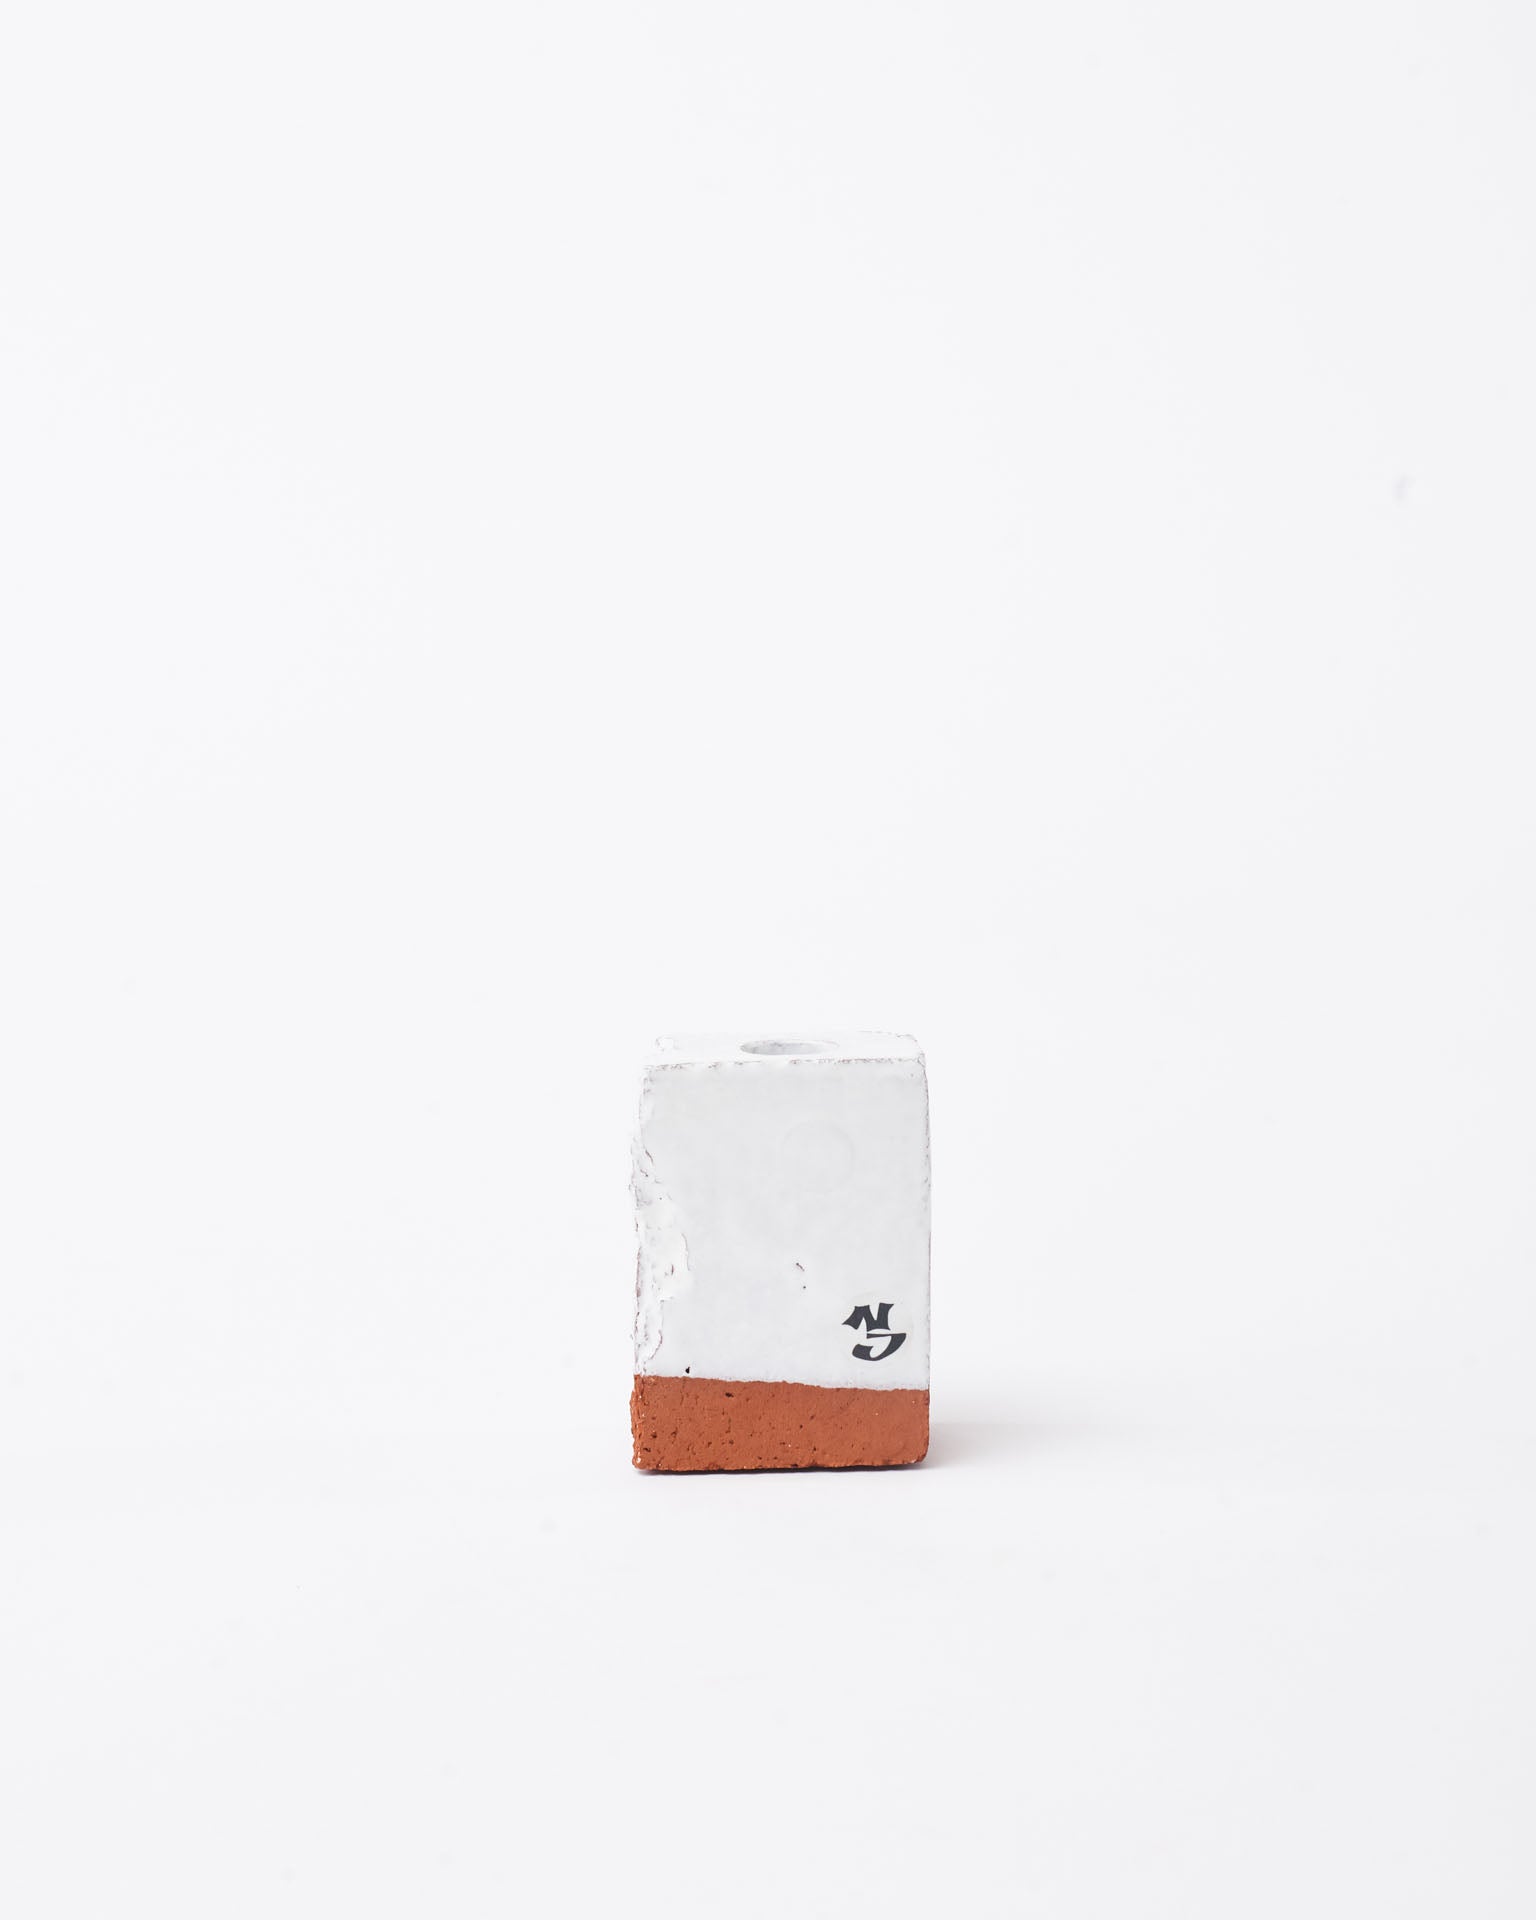 Handmade white brick ceramic candle holder small in white background